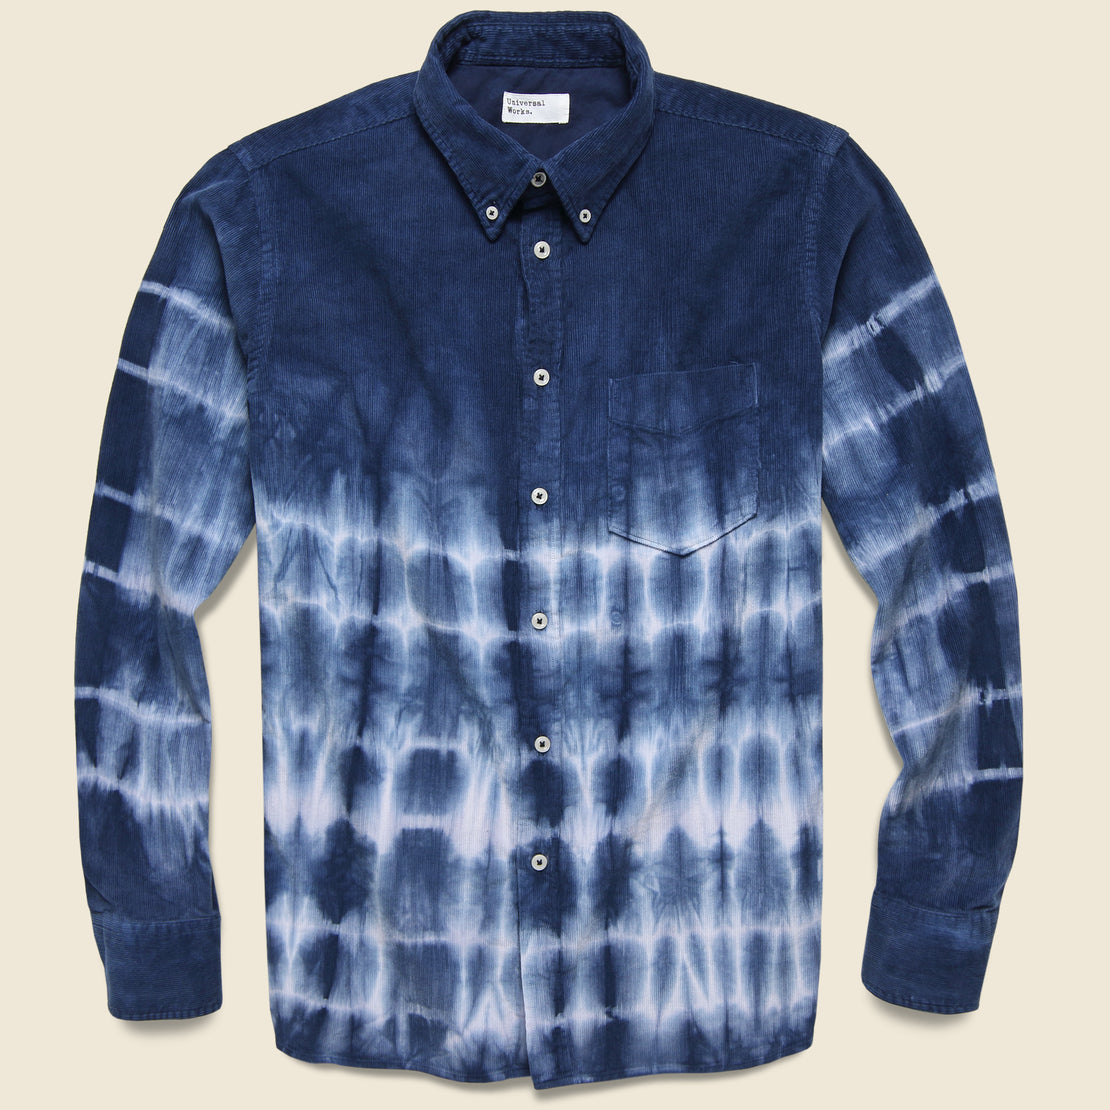 Universal Works Cord Everyday Shirt - Indigo Tie Dye